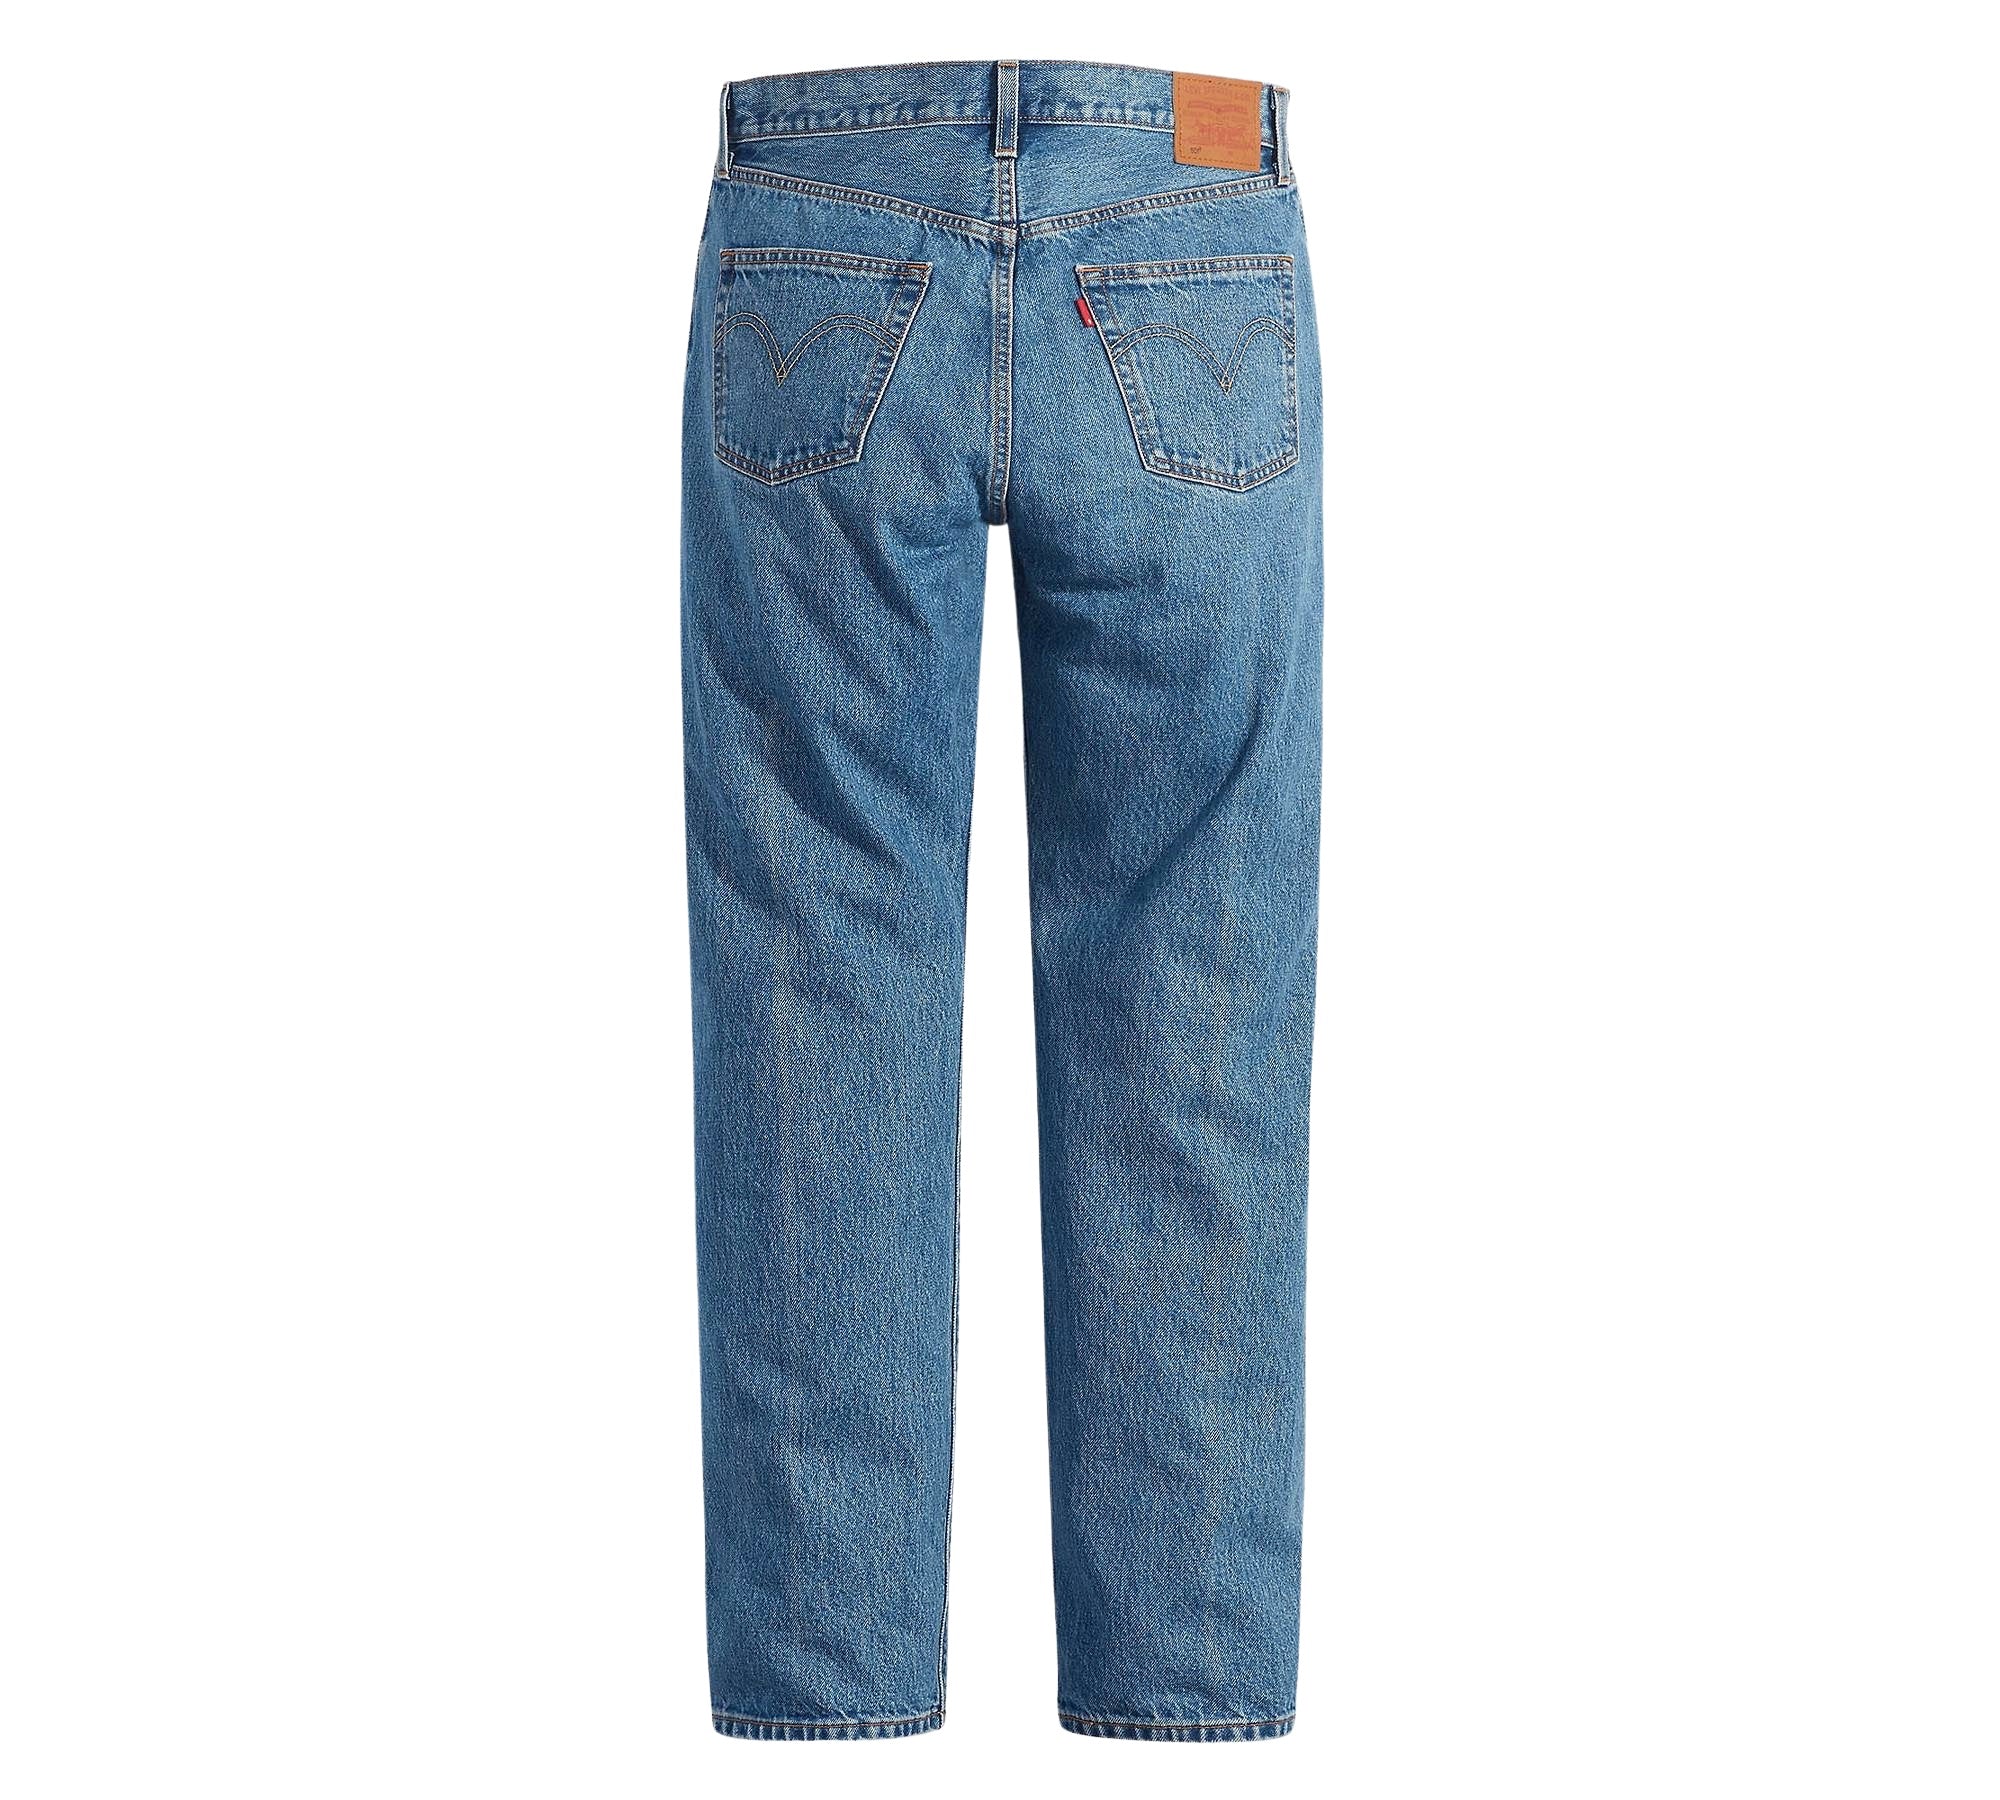 4 Pack - Vintage LEVI'S Classic Blue Zip Fly Jeans - Waist 30 - Length 30 - Vintage Superstore Online